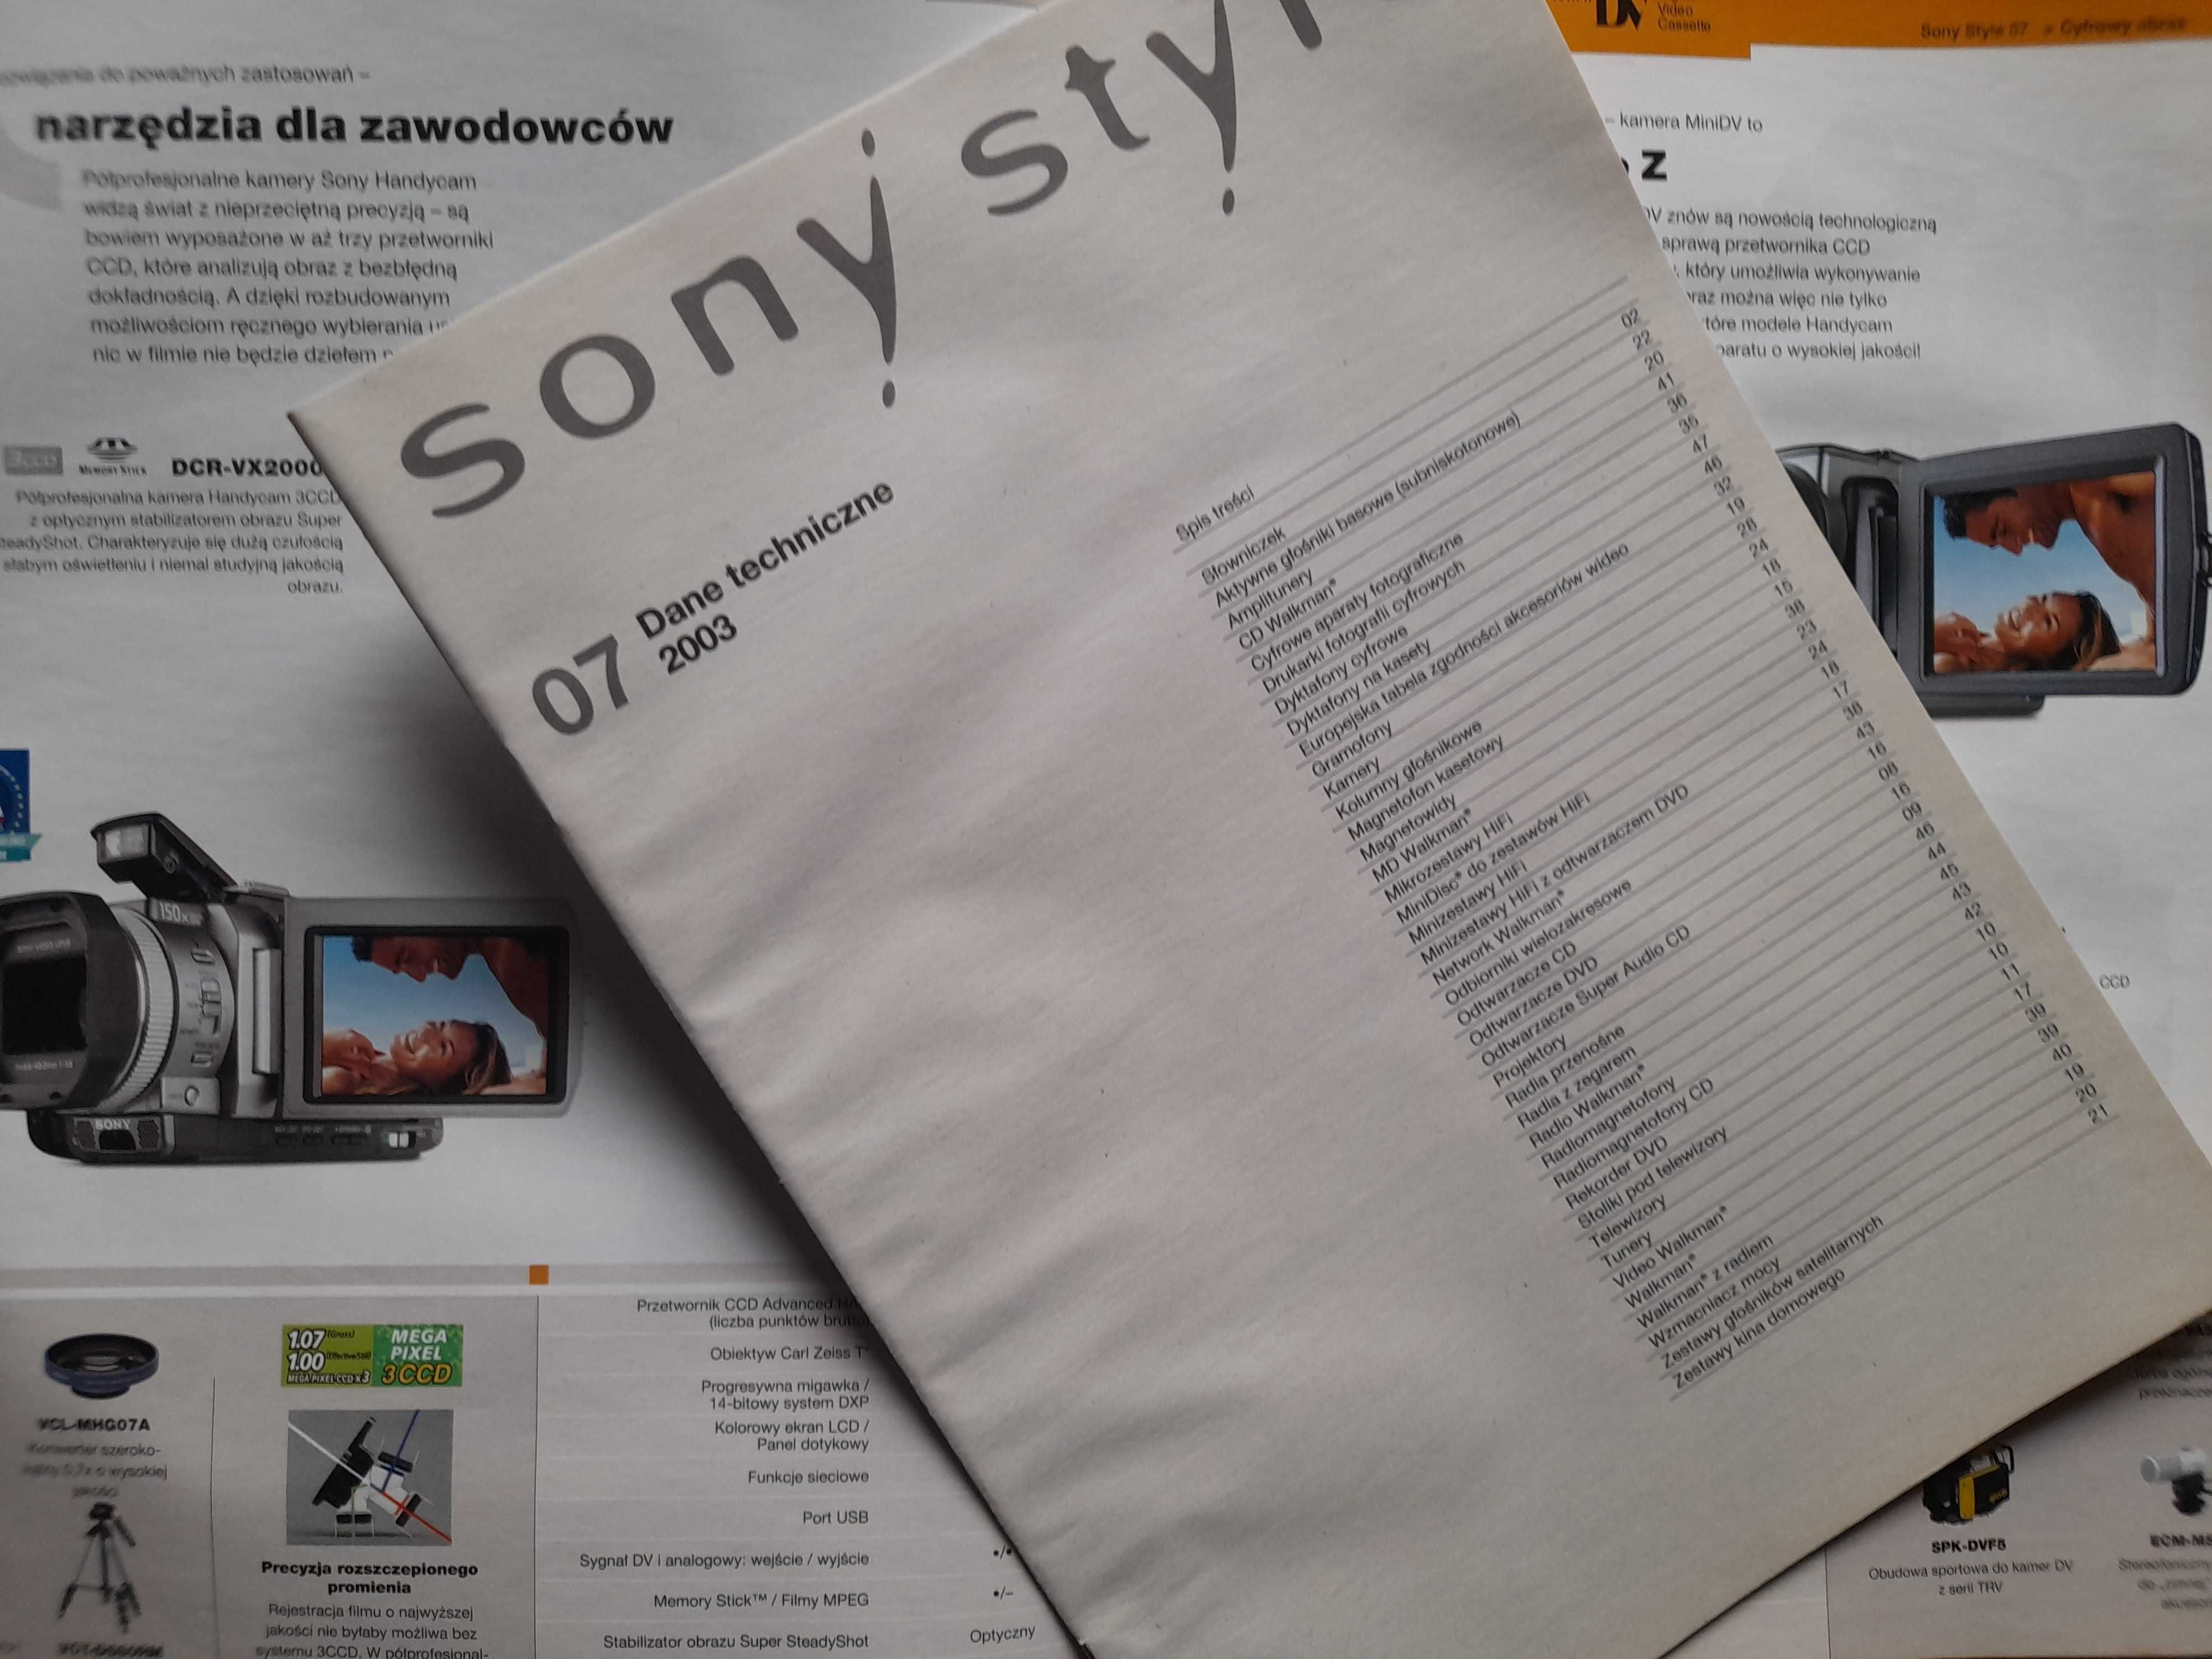 SONY Style TV, audio, car audio i inne katalog polski wiosna 2003